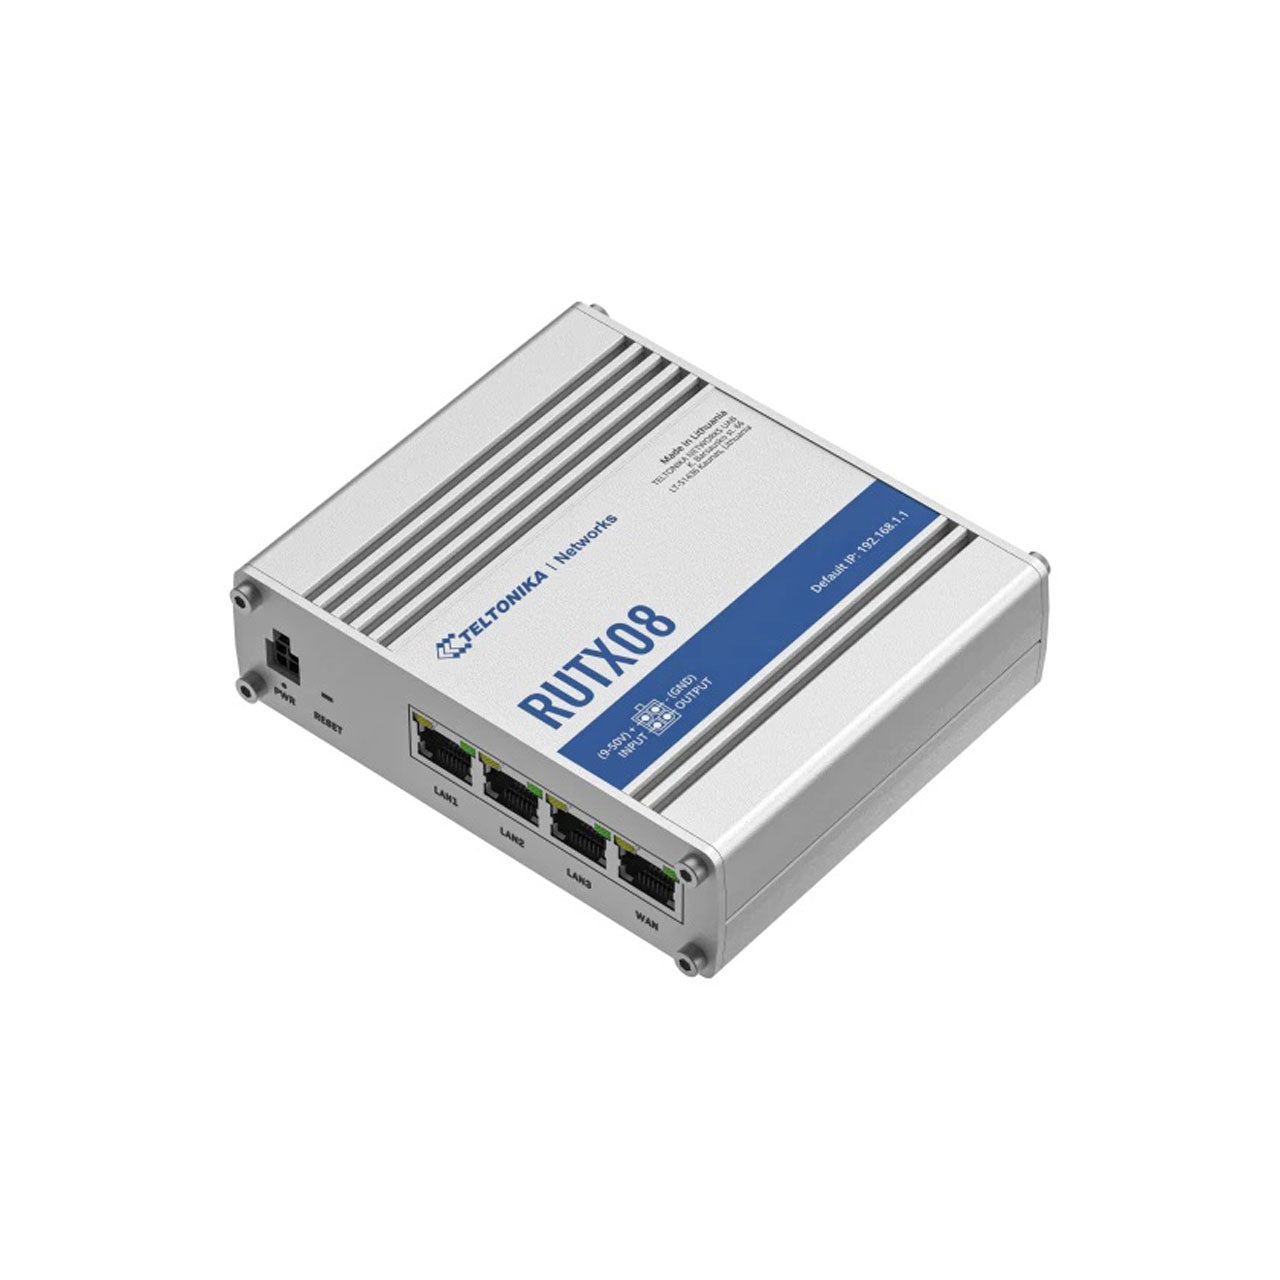 Teltonka RUTX08000200 - Routeur Ethernet Gigabit industriel RUTX08, alimentation US, 4RJ45